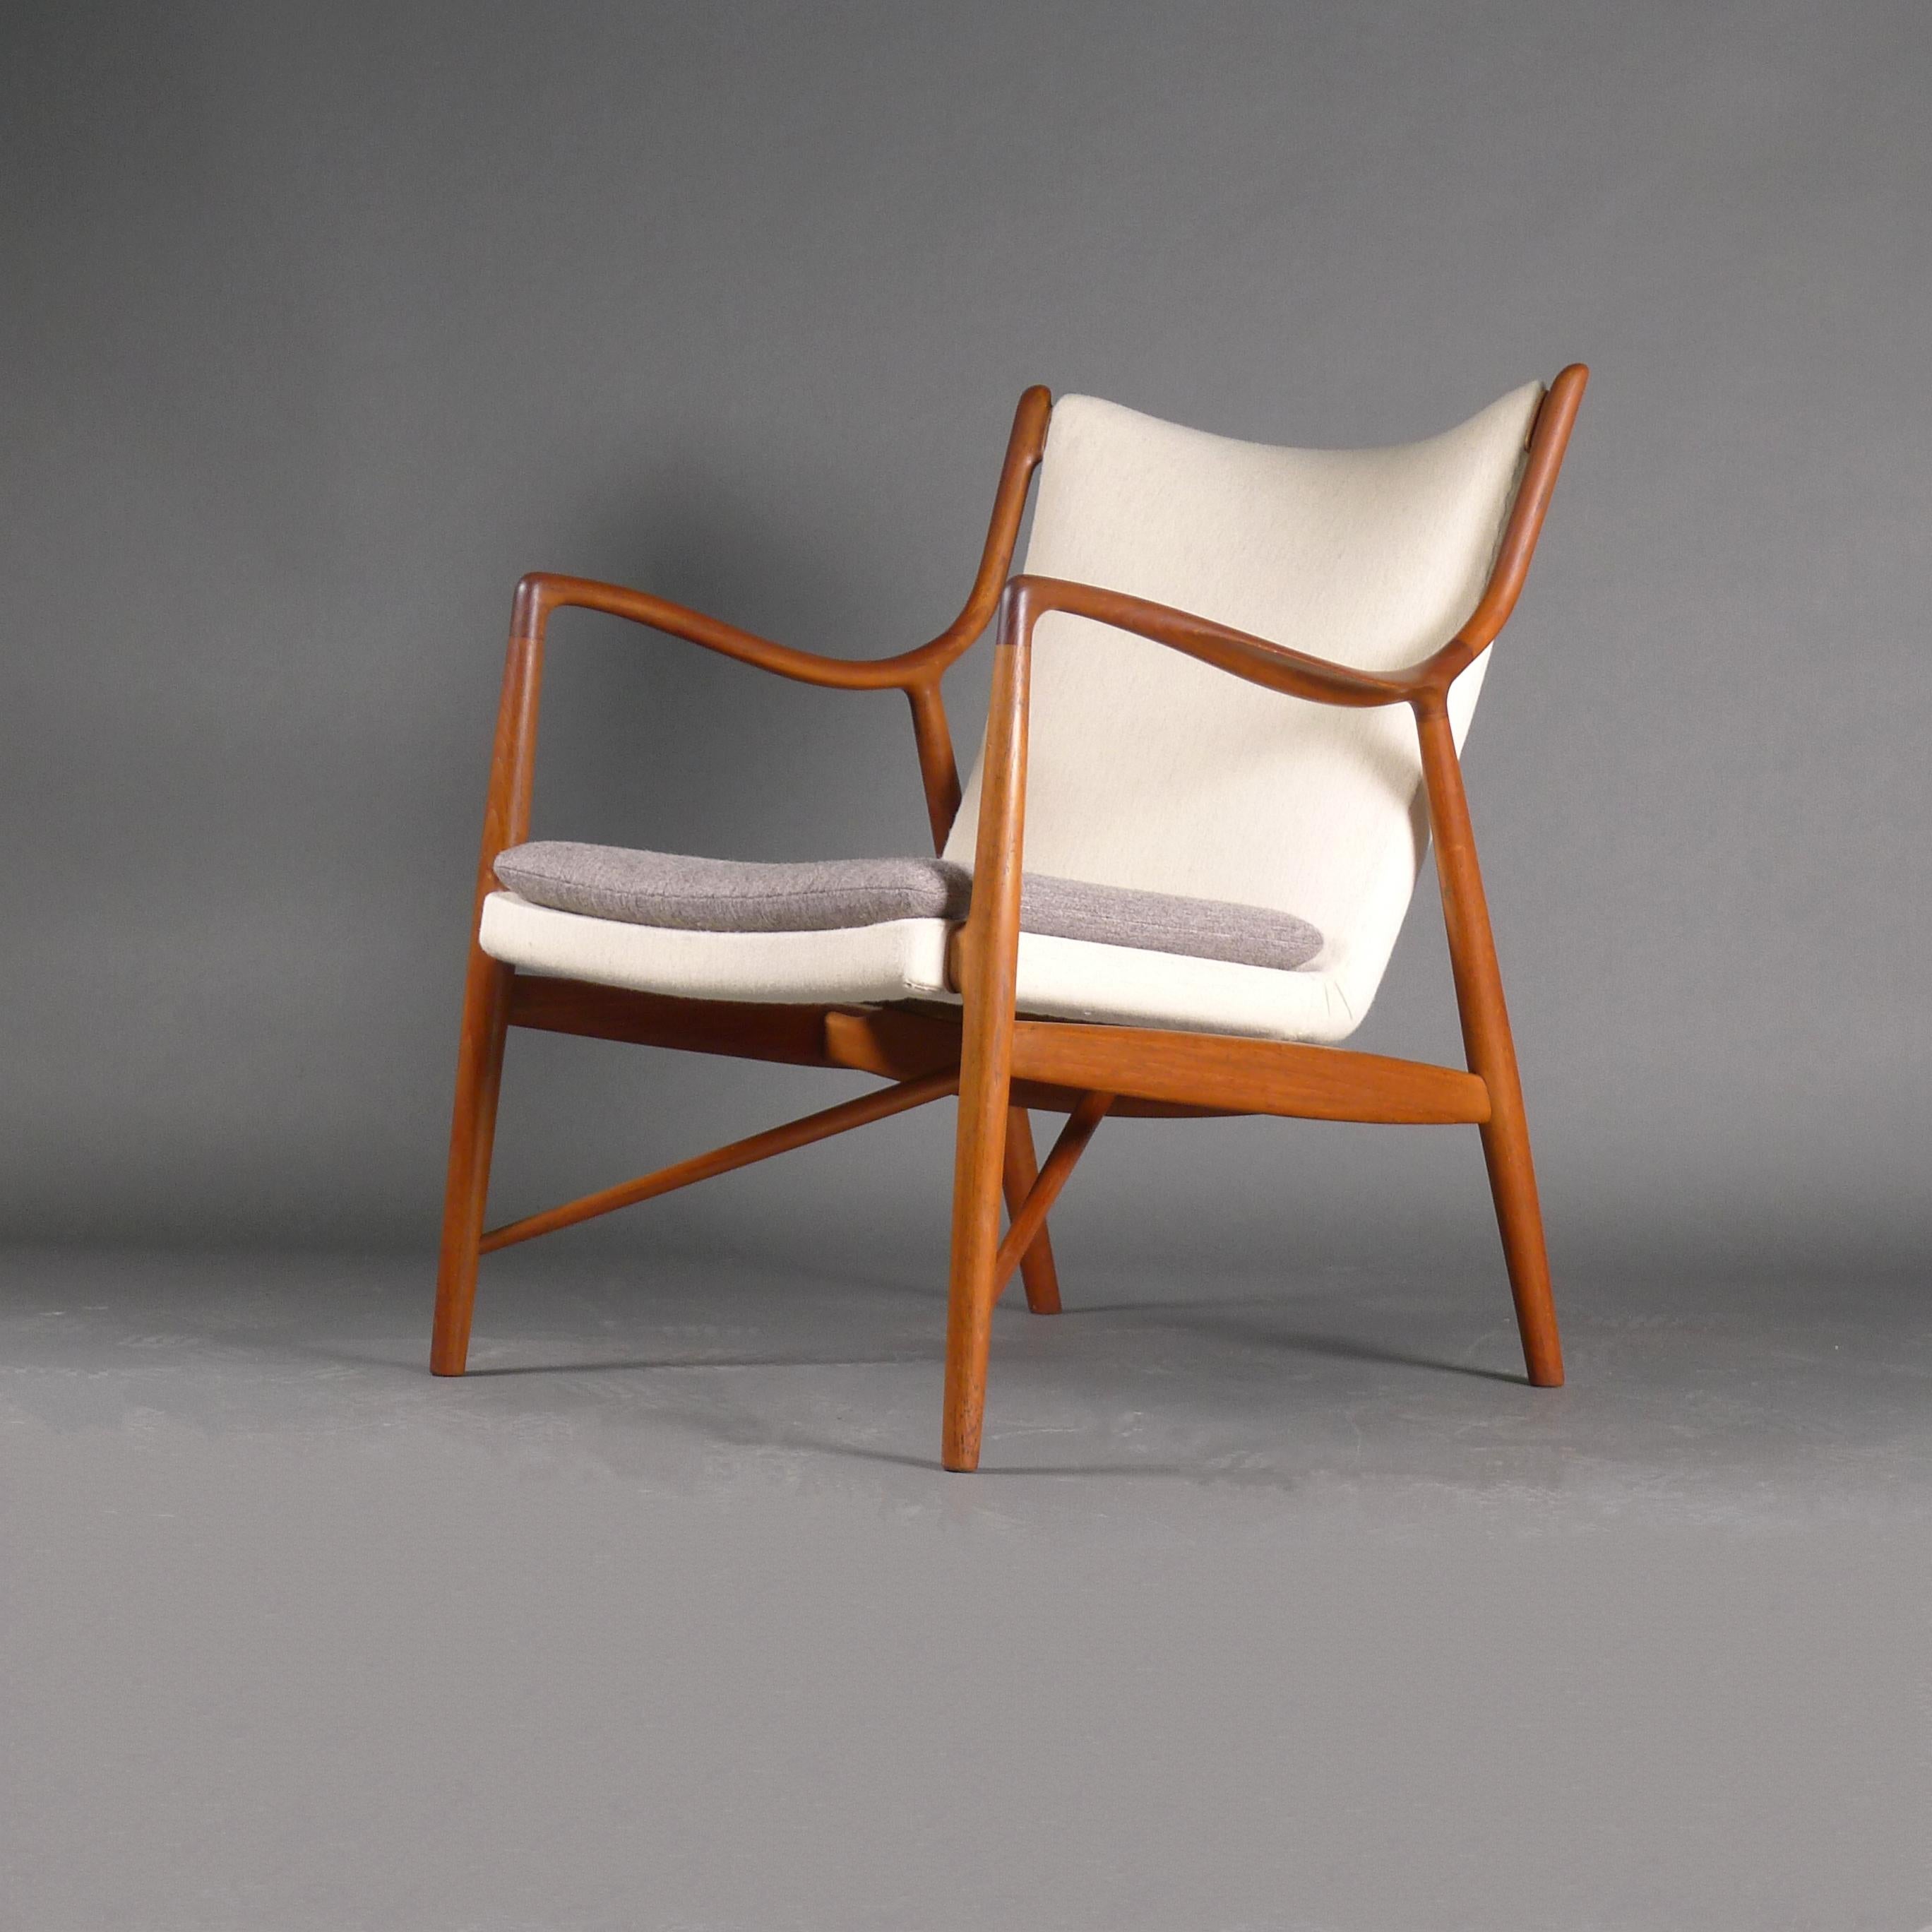 Mid-Century Modern Model NV45 Easy Chair, Designed by Finn Juhl, Made by Niels Vodder, 1940s For Sale